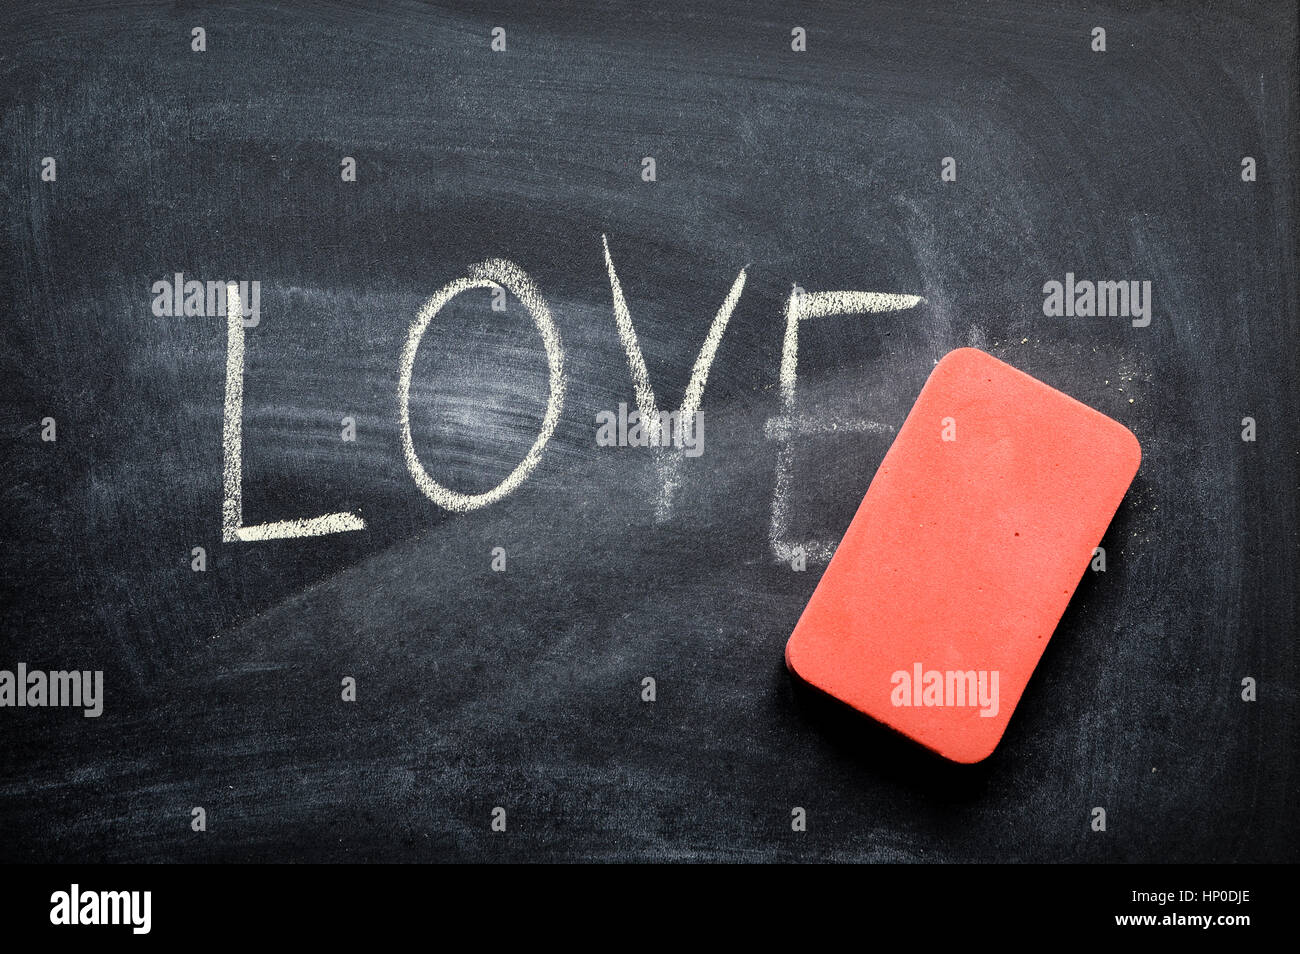 erasing love, hand written word on blackboard being erased concept Stock Photo